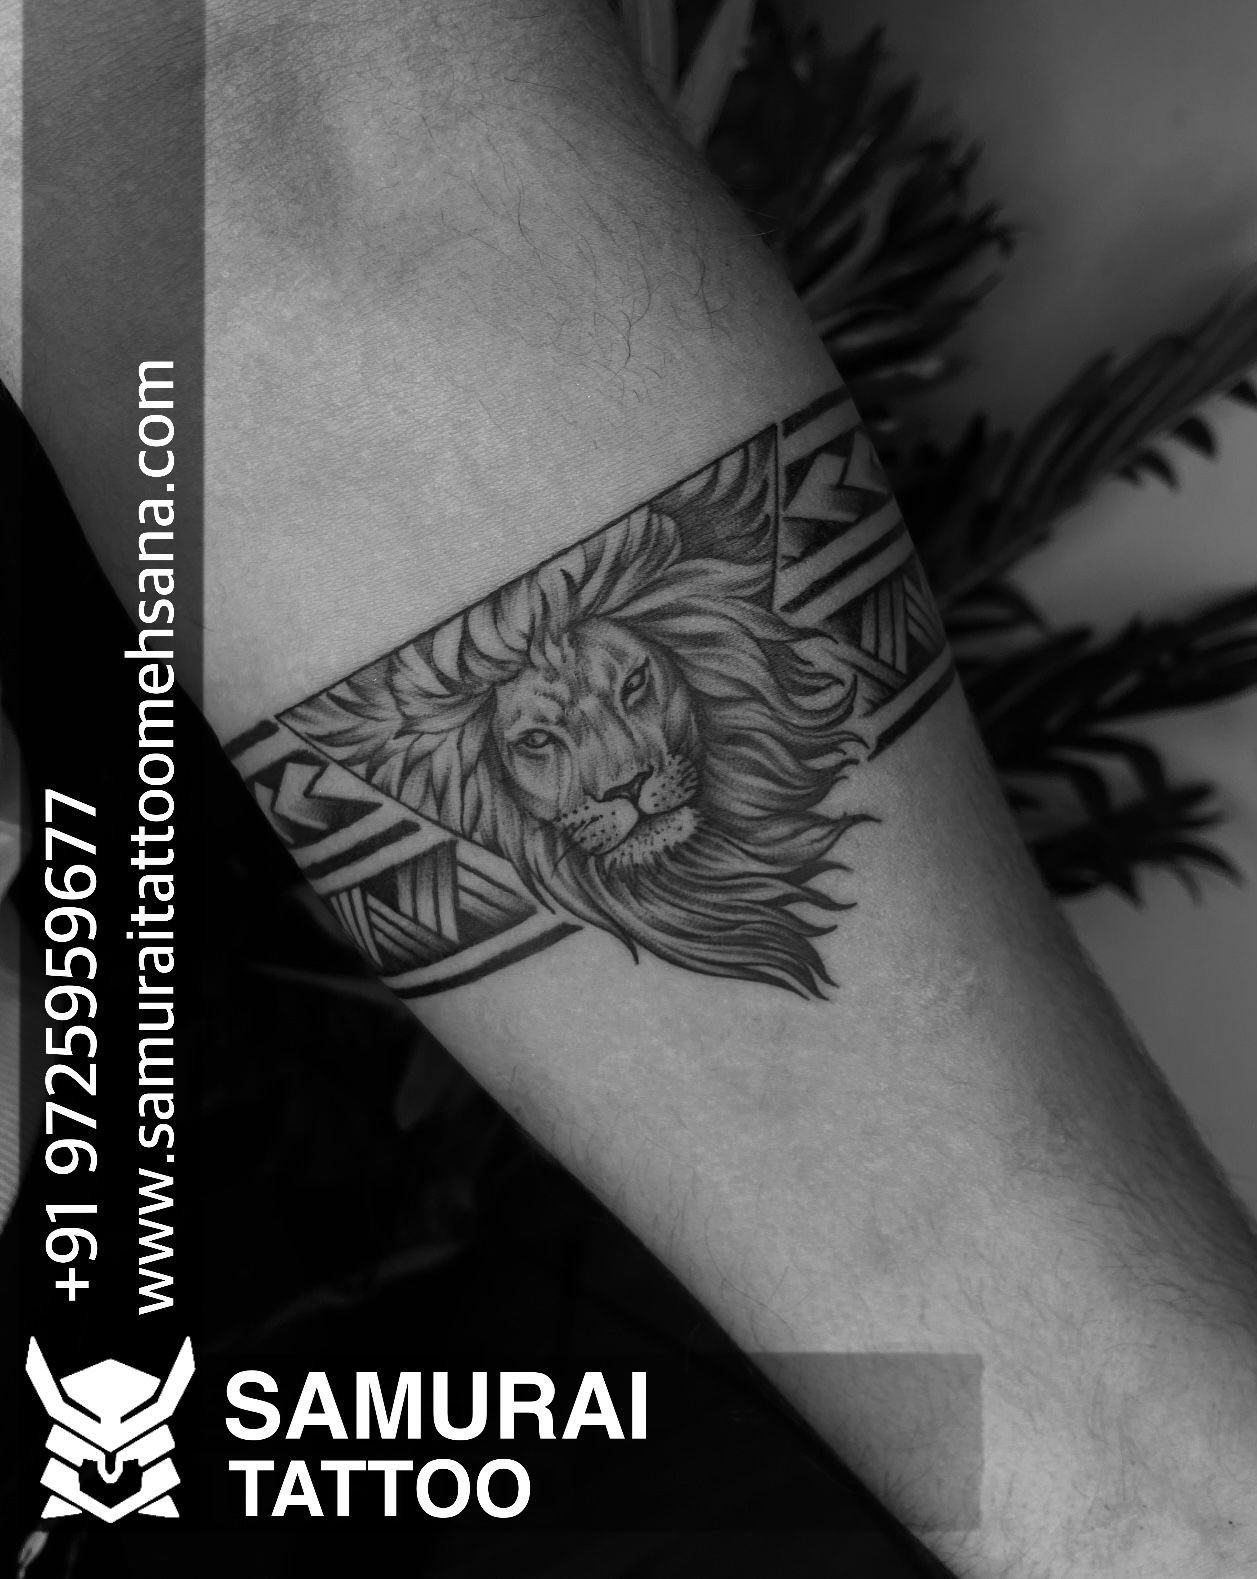 Arm Band Tattoo by Manohar Koli at Aliens Tattoo India on Behance